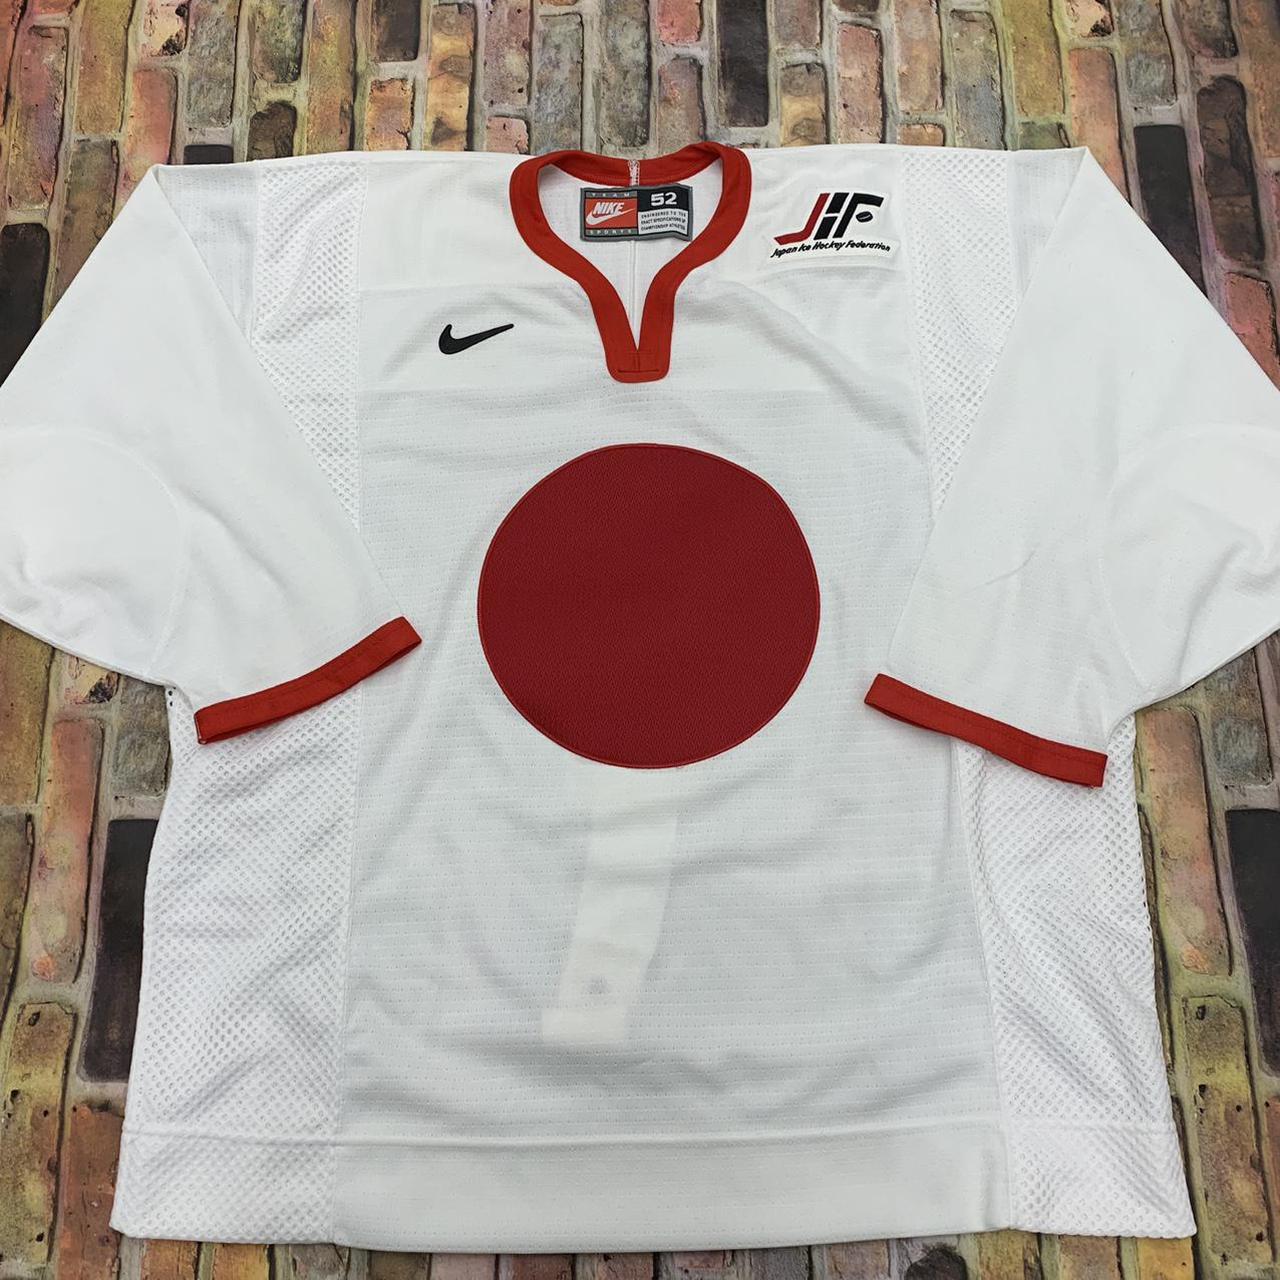 Japan xxl jersey